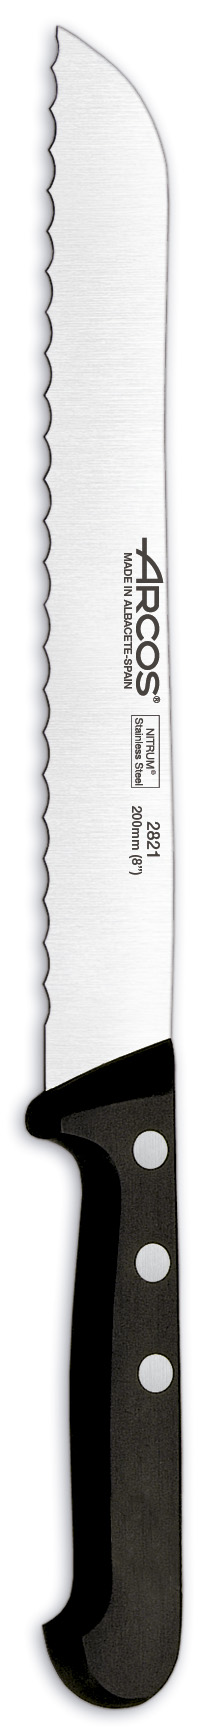 סכין לחם ארקוס דגם 2821 - Arcos